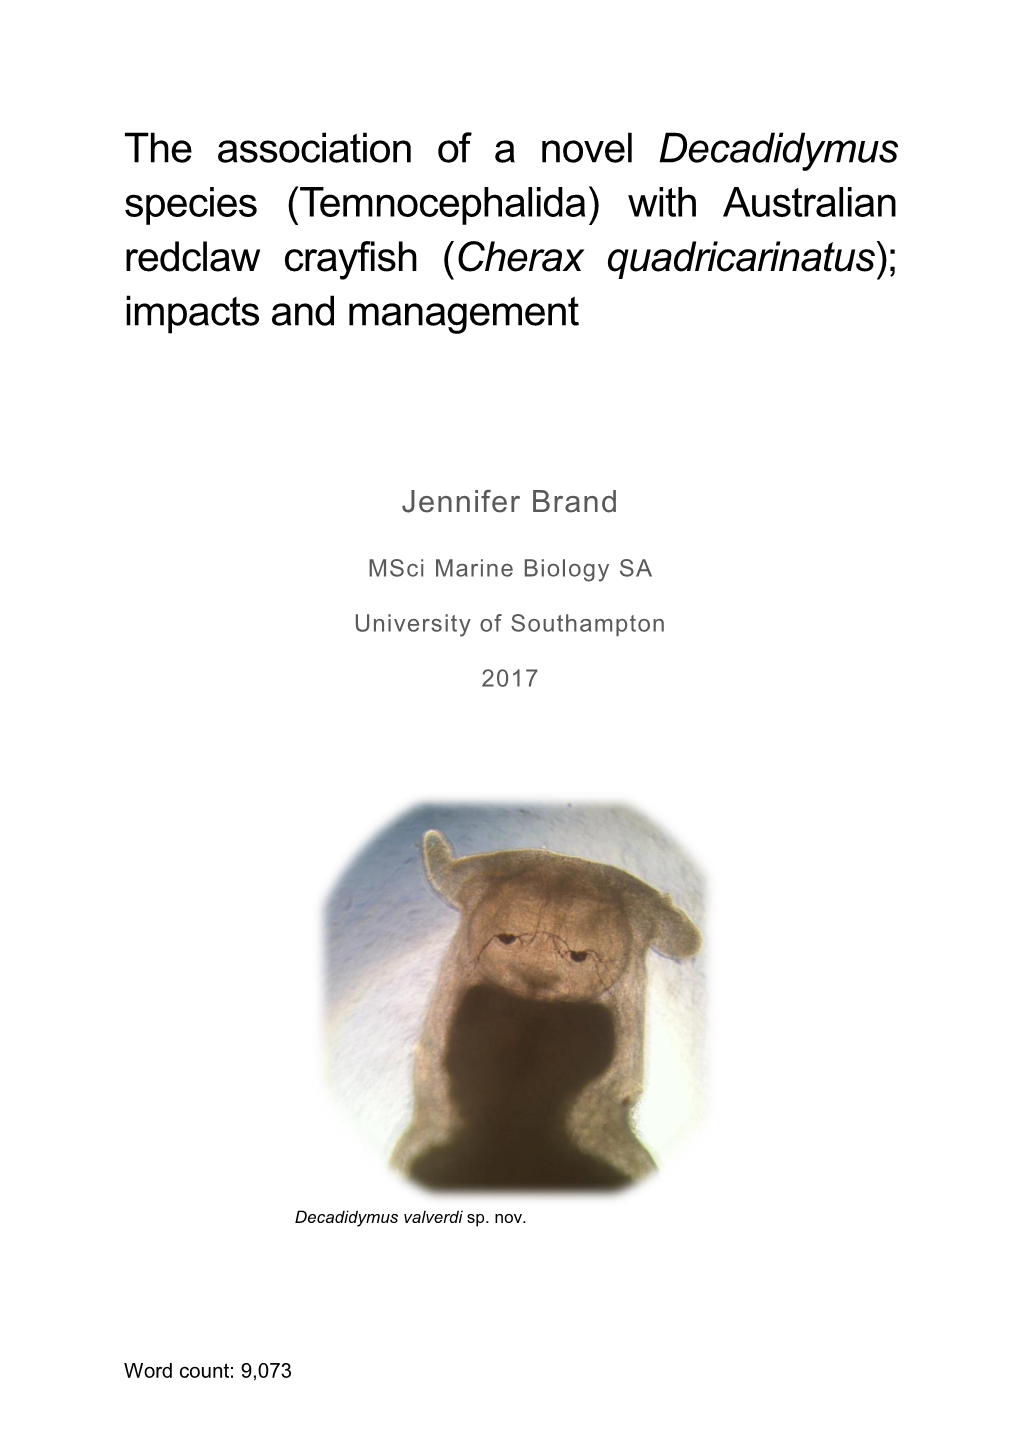 (Temnocephalida) with Australian Redclaw Crayfish (Cherax Quadricarinatus); Impacts and Management